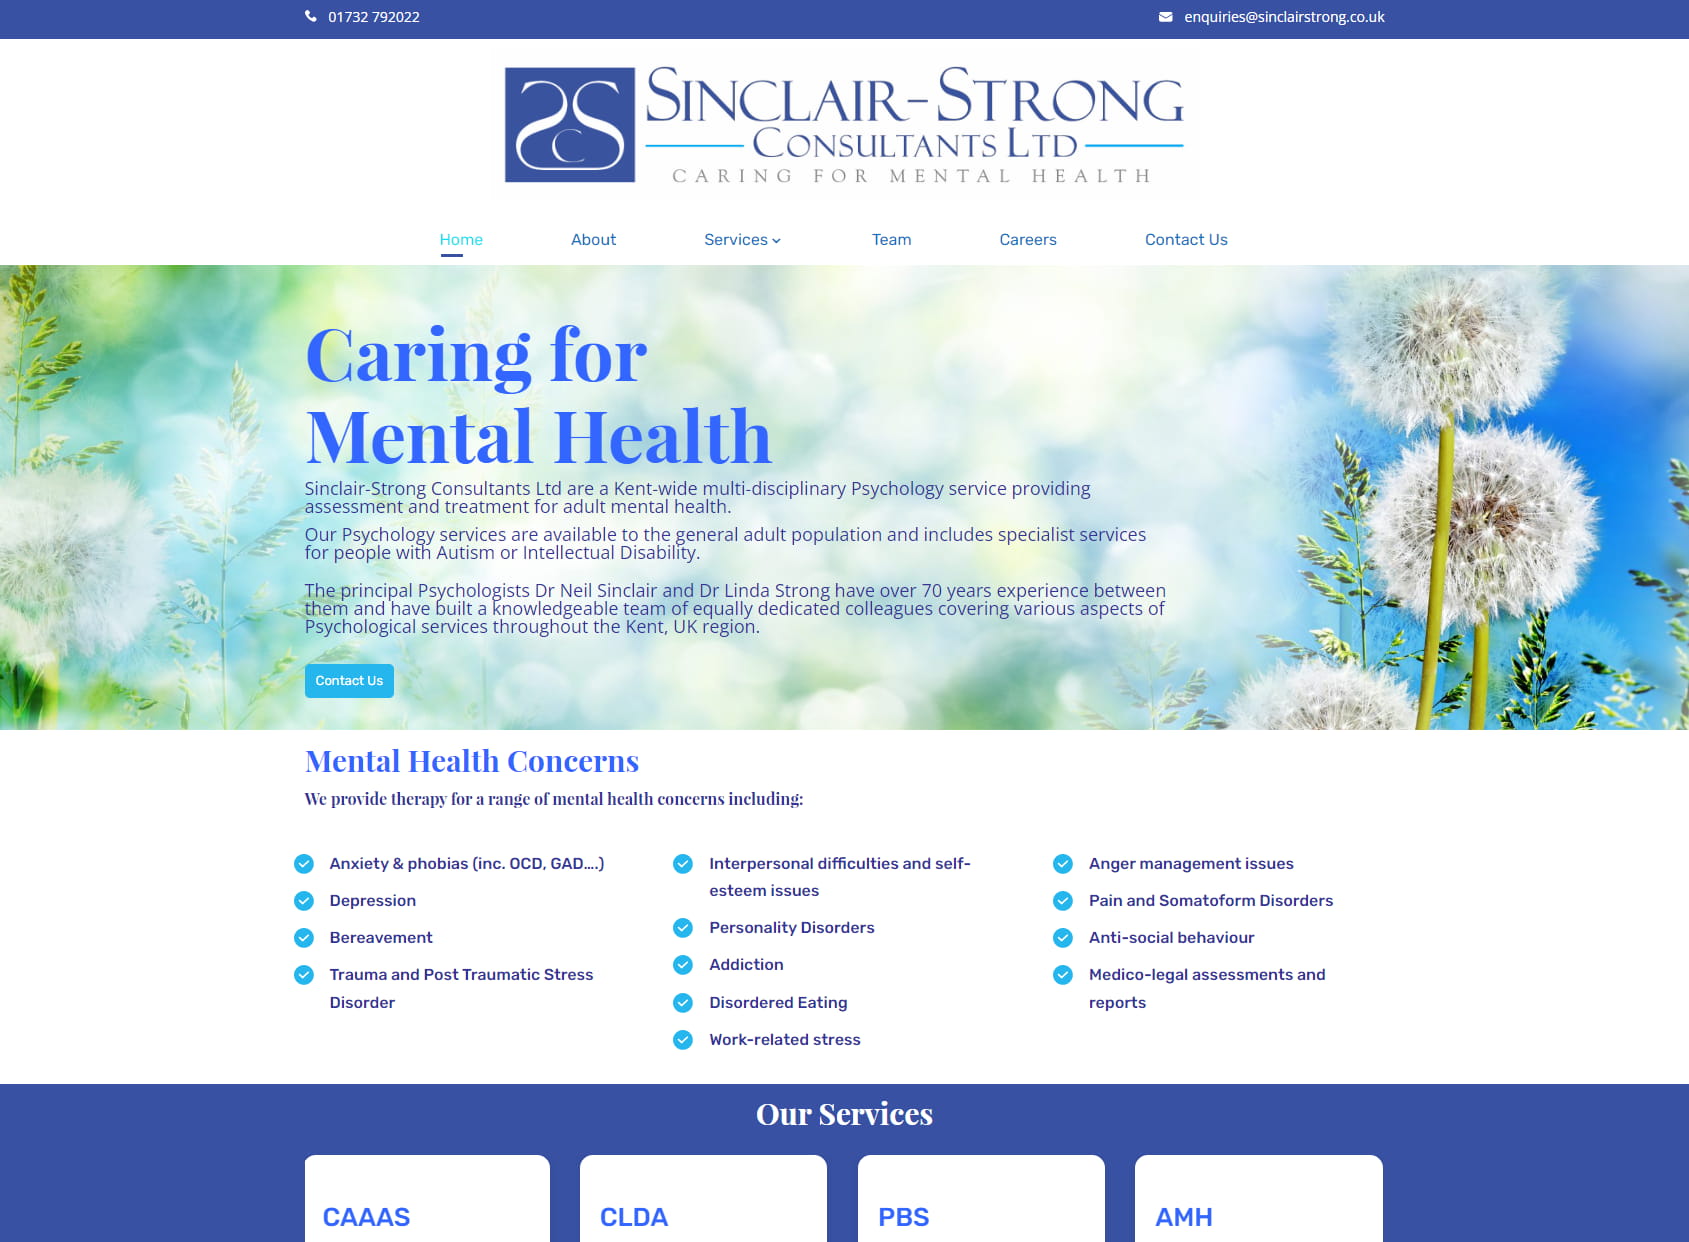 Sinclair-Strong Consultants Ltd